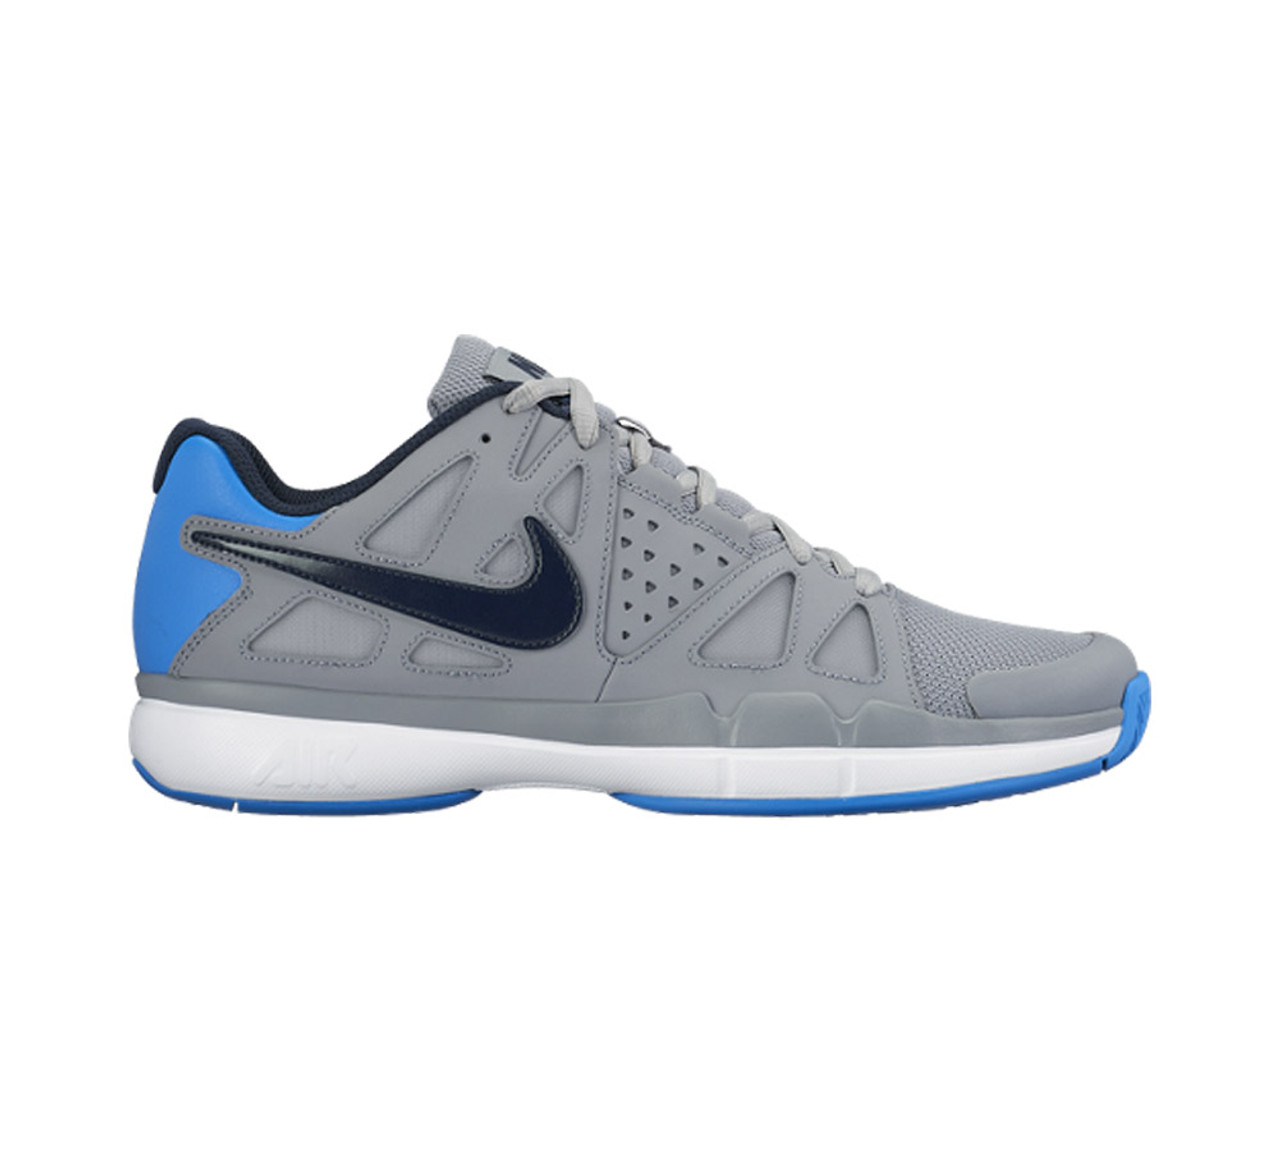 Nike Men's Air Vapor Advantage Tennis Shoe - Grey | Discount Nike Men's  Athletic & More - Shoolu.com | Shoolu.com